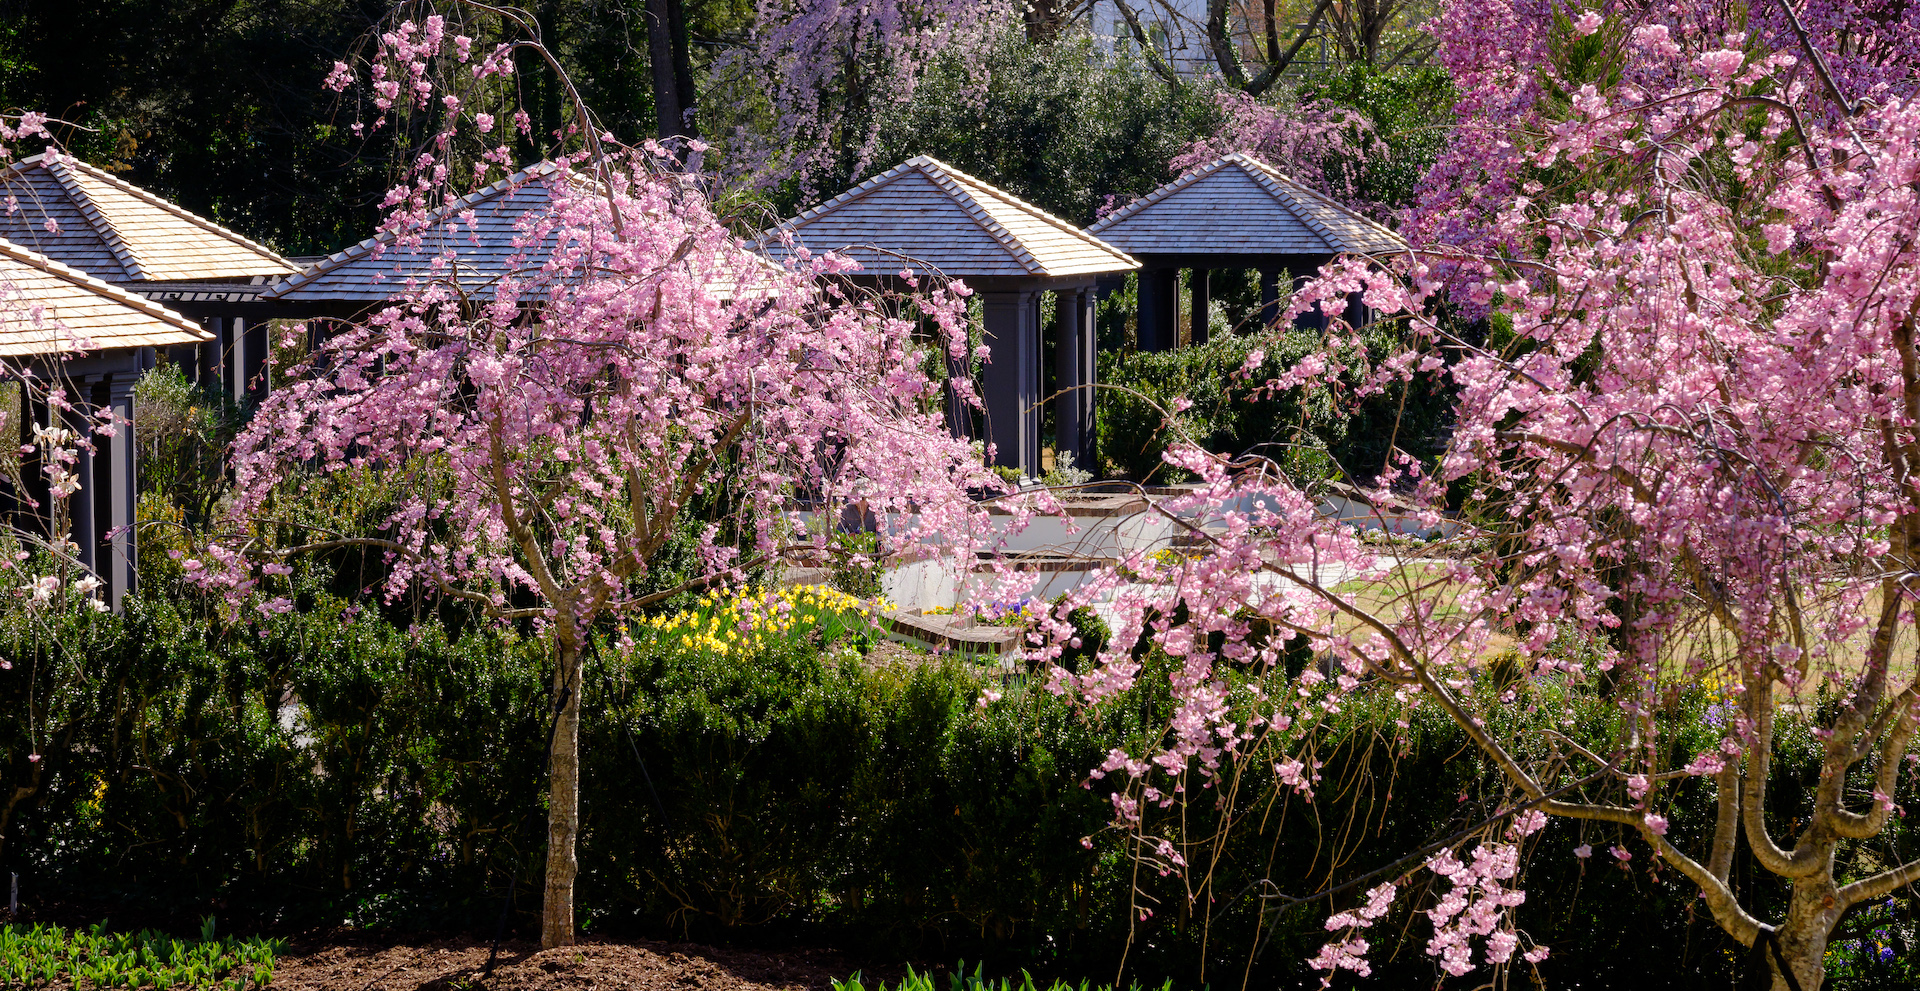 “Reynolda Gardens: Where Nature’s Beauty Blooms in Winston-Salem”